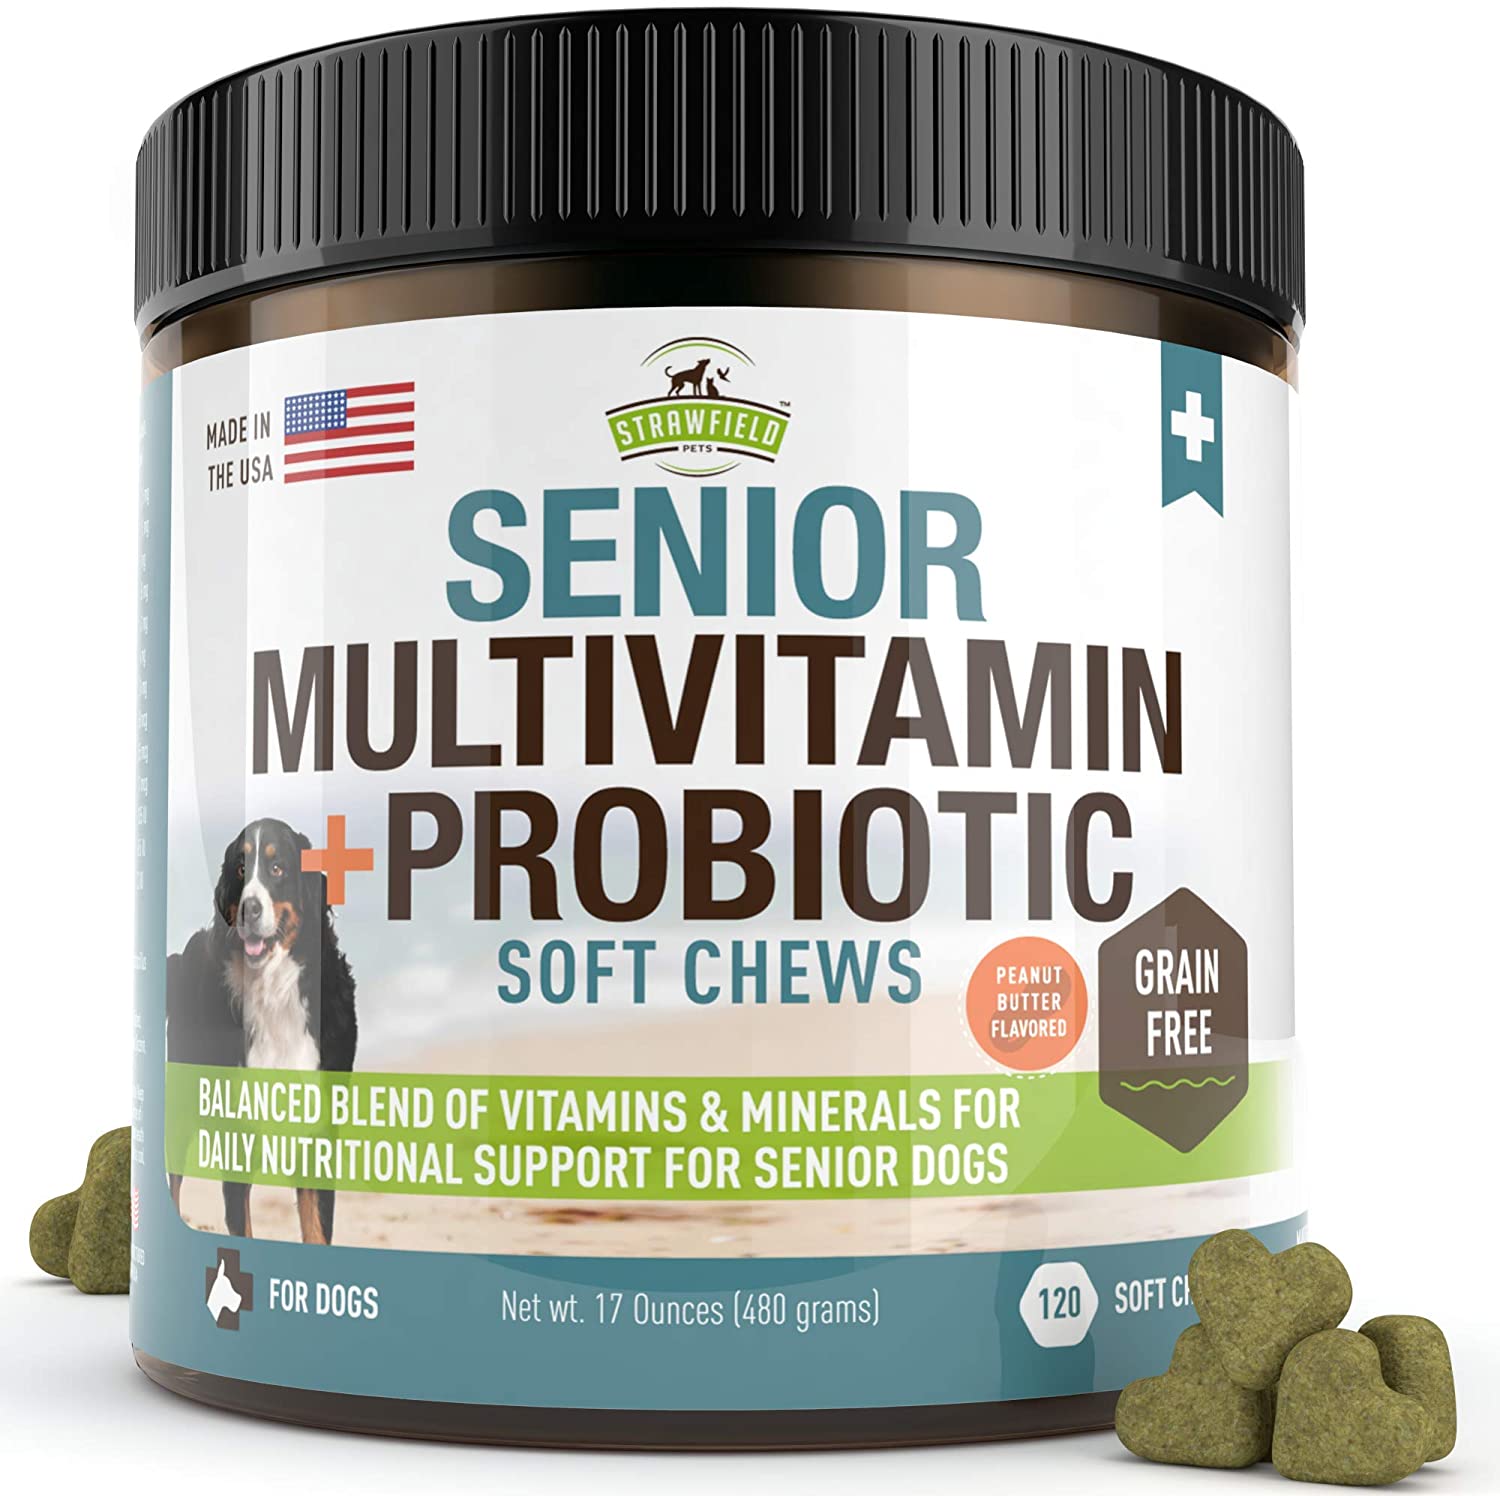 Strawfield Pets Senior Multivitamin Probiotic